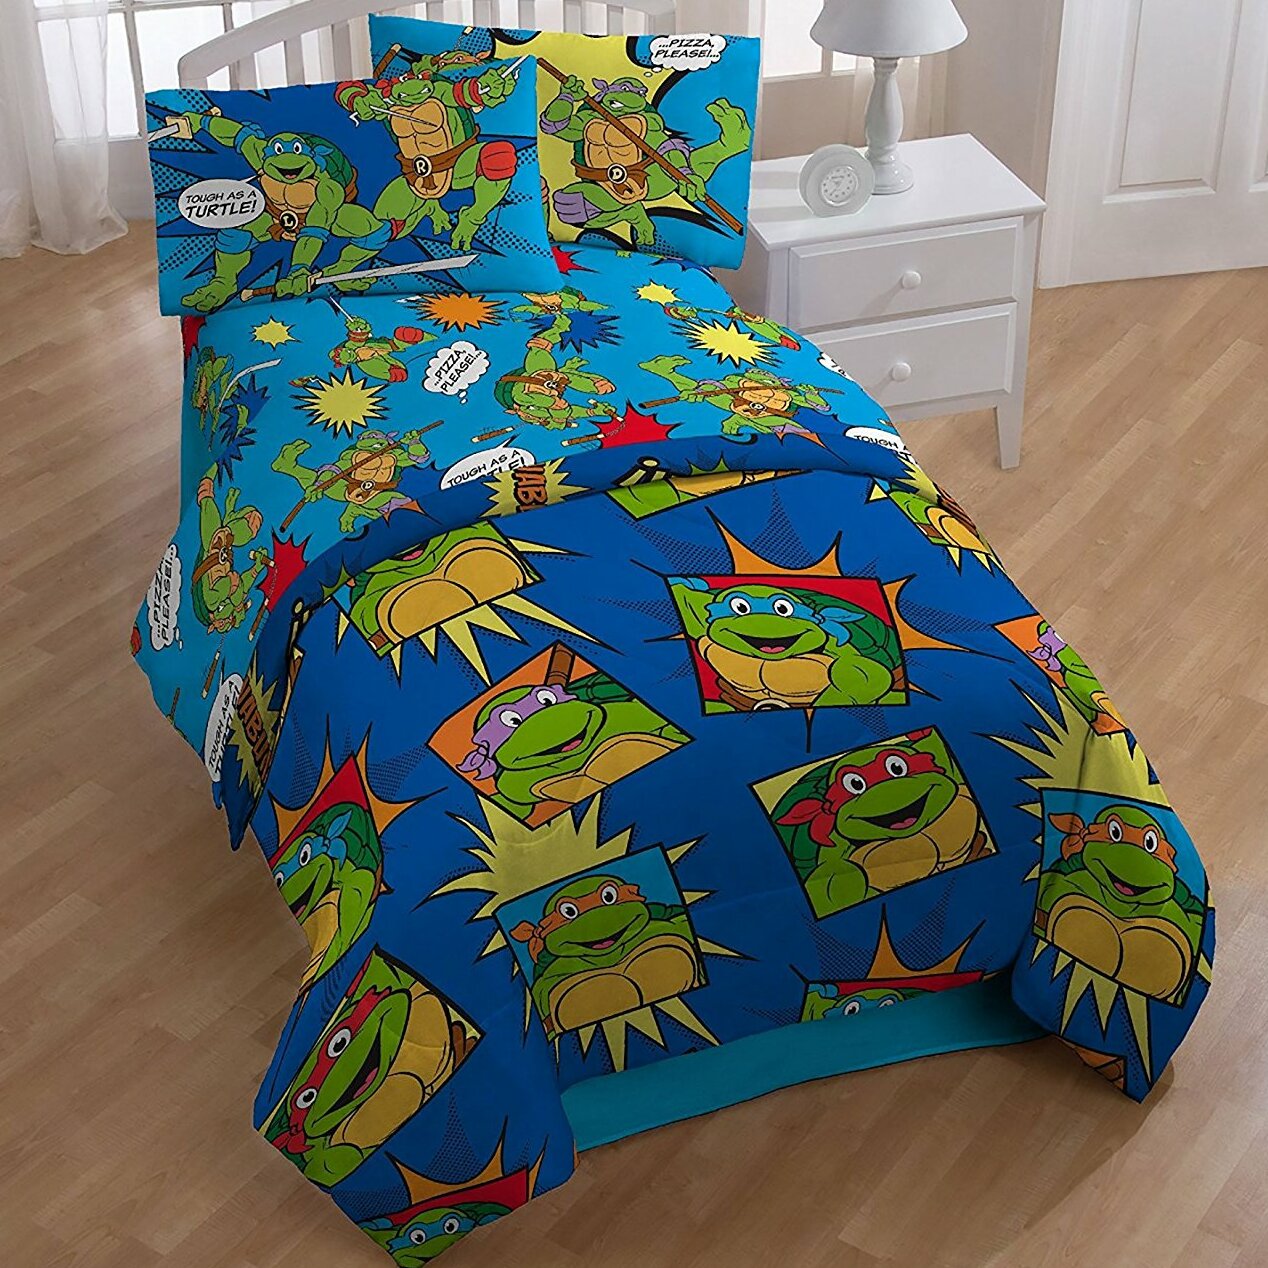 Nickelodeon Teenage Mutant Ninja Turtle 4 Piece Toddler Bedding